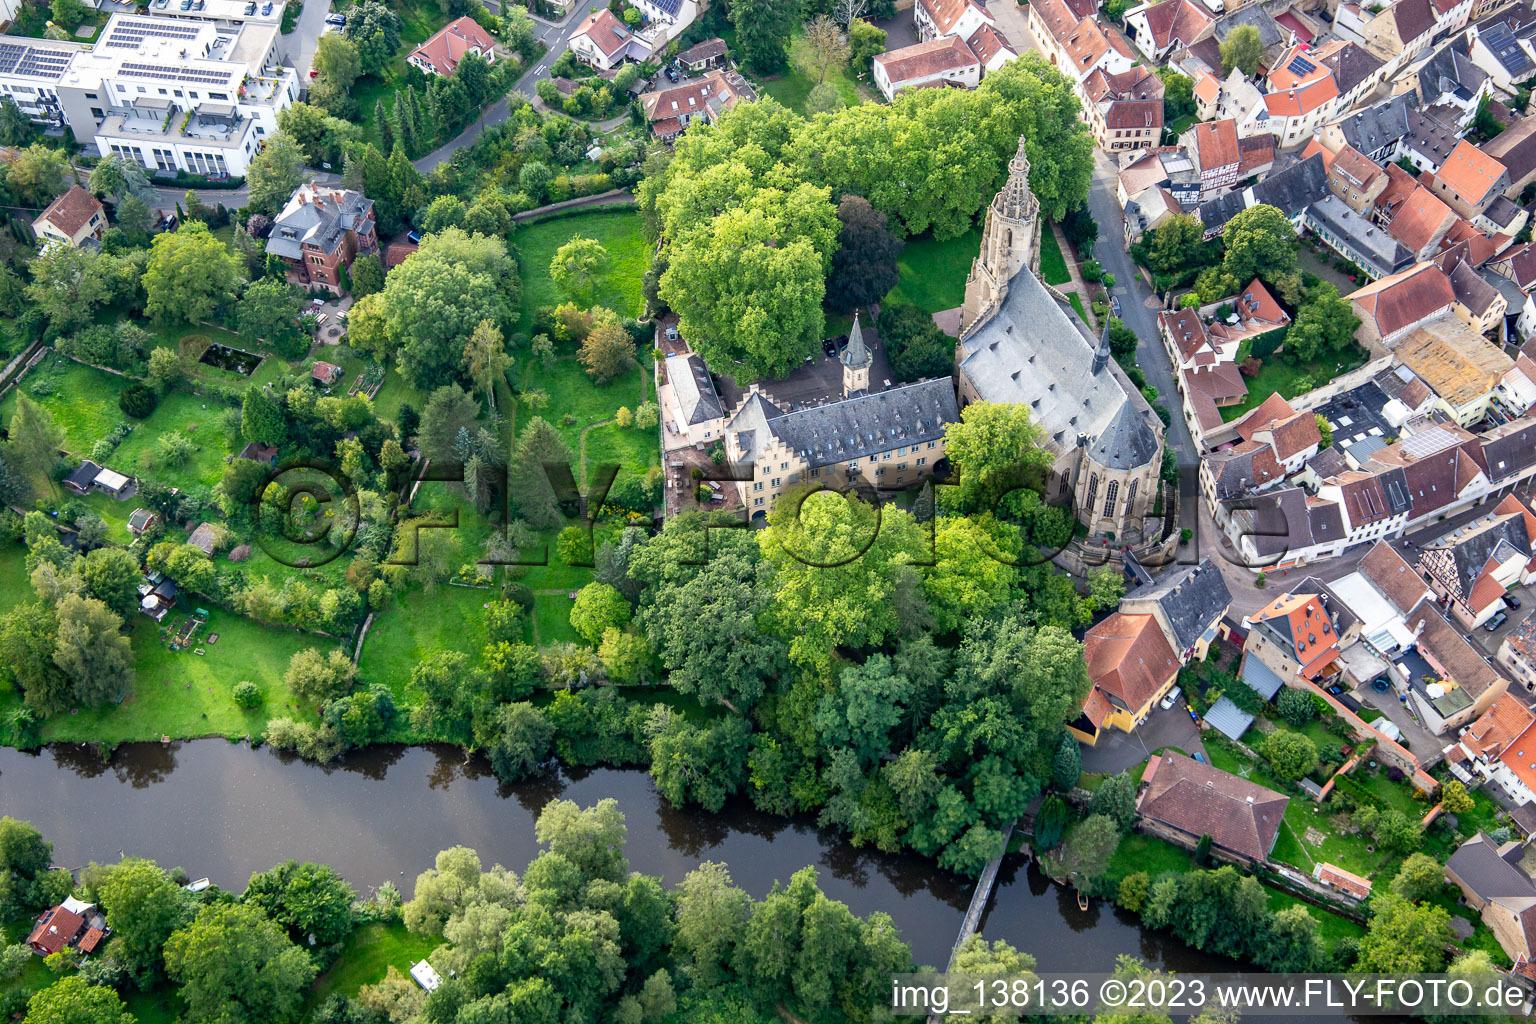 Aerial view of Castle church Meisenheim in Meisenheim in the state Rhineland-Palatinate, Germany